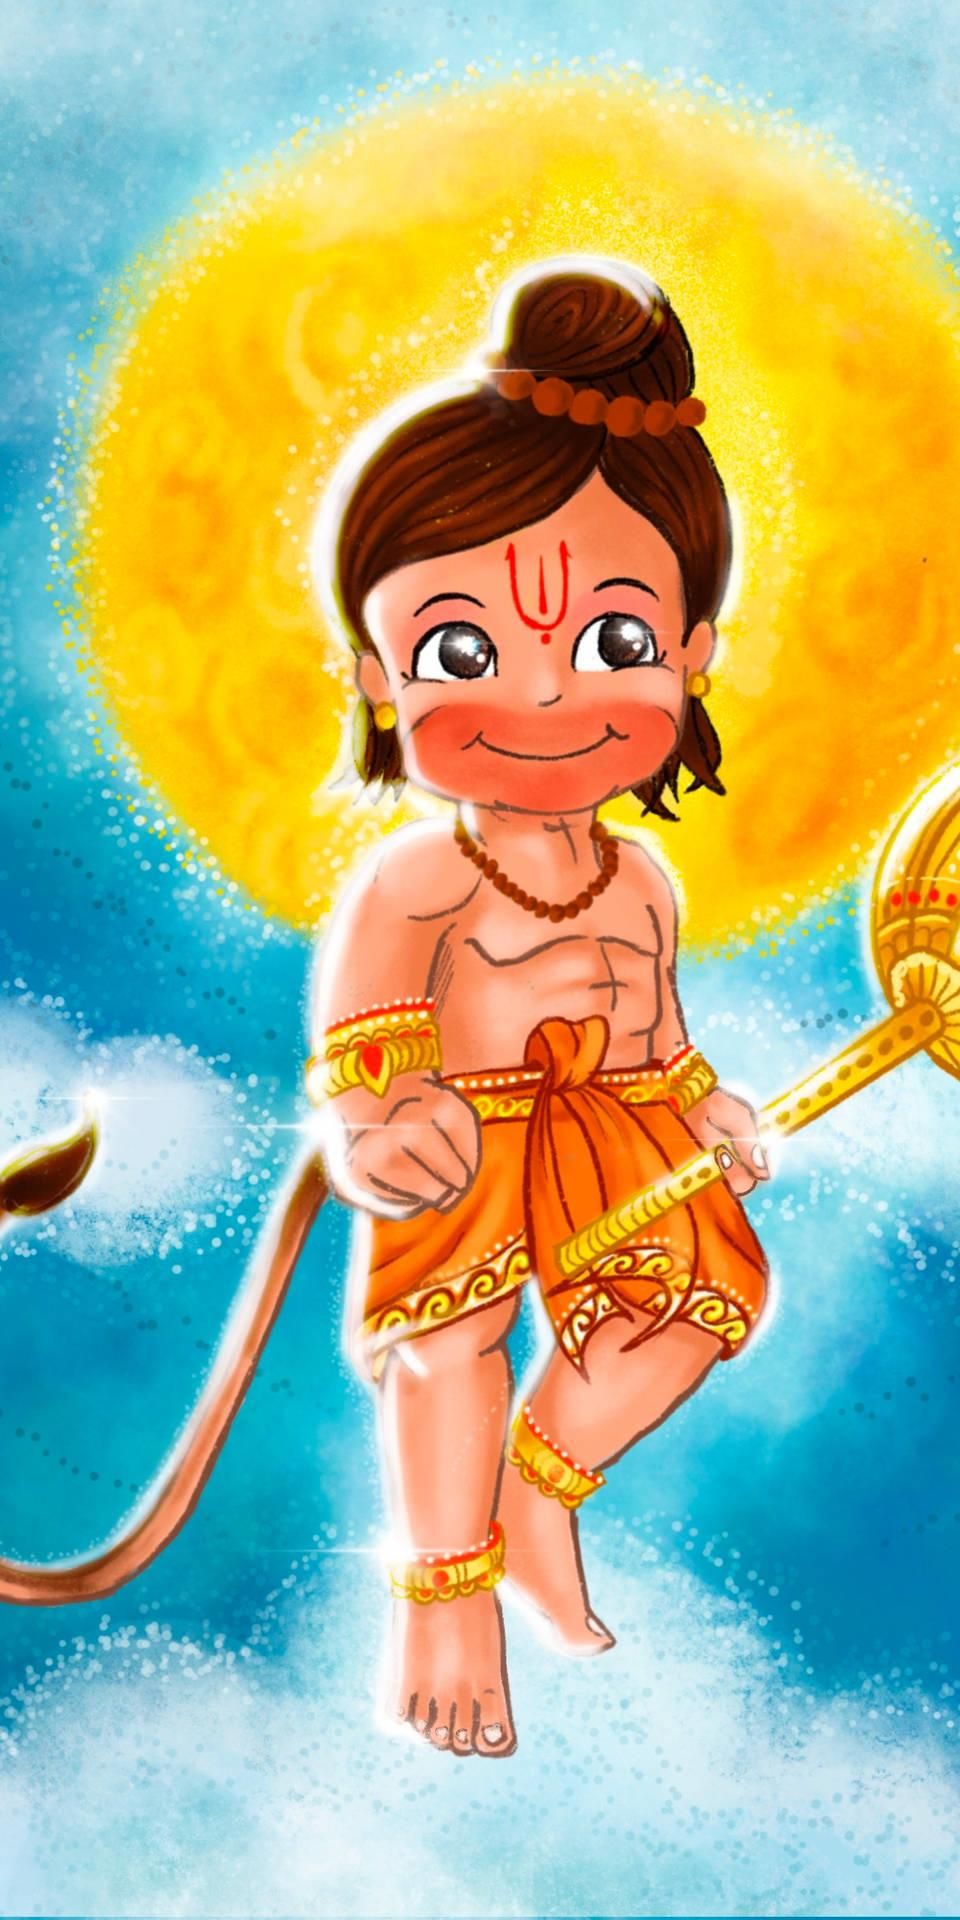 Iphone Hanuman Wallpaper, Bala Hanuman Wallpaper For Iphone, Cartoon Hanuman Wallpaper